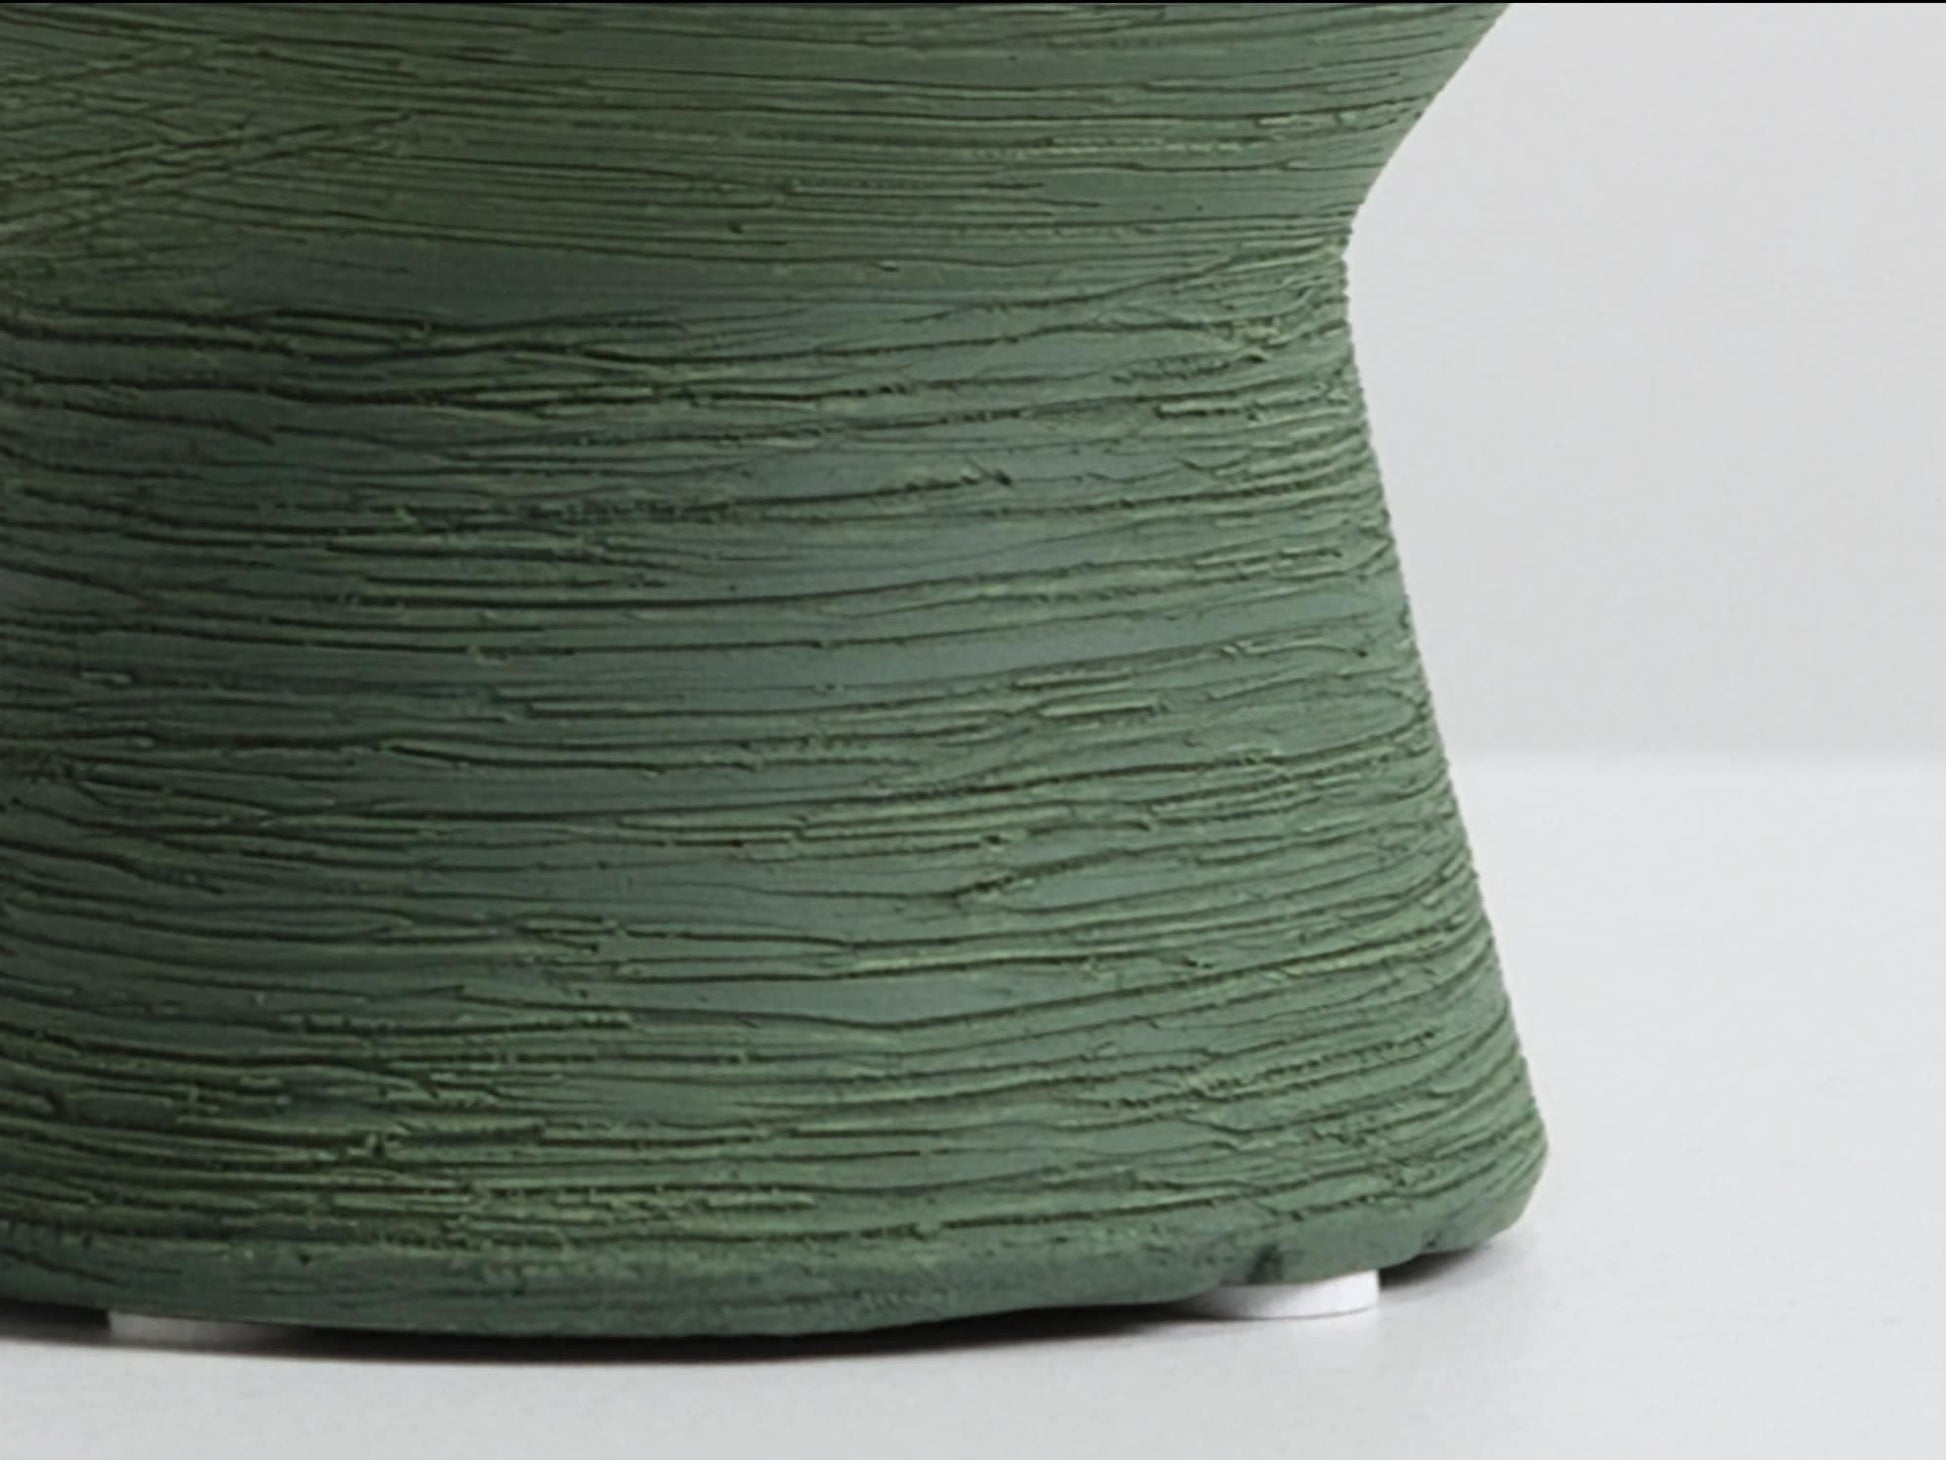 Nordic Abstract Vase With a Rough Texture | Zen Decor, Ceramic Vase, Minimalist Vase, Vases for Flowers, Flower Pots, - -